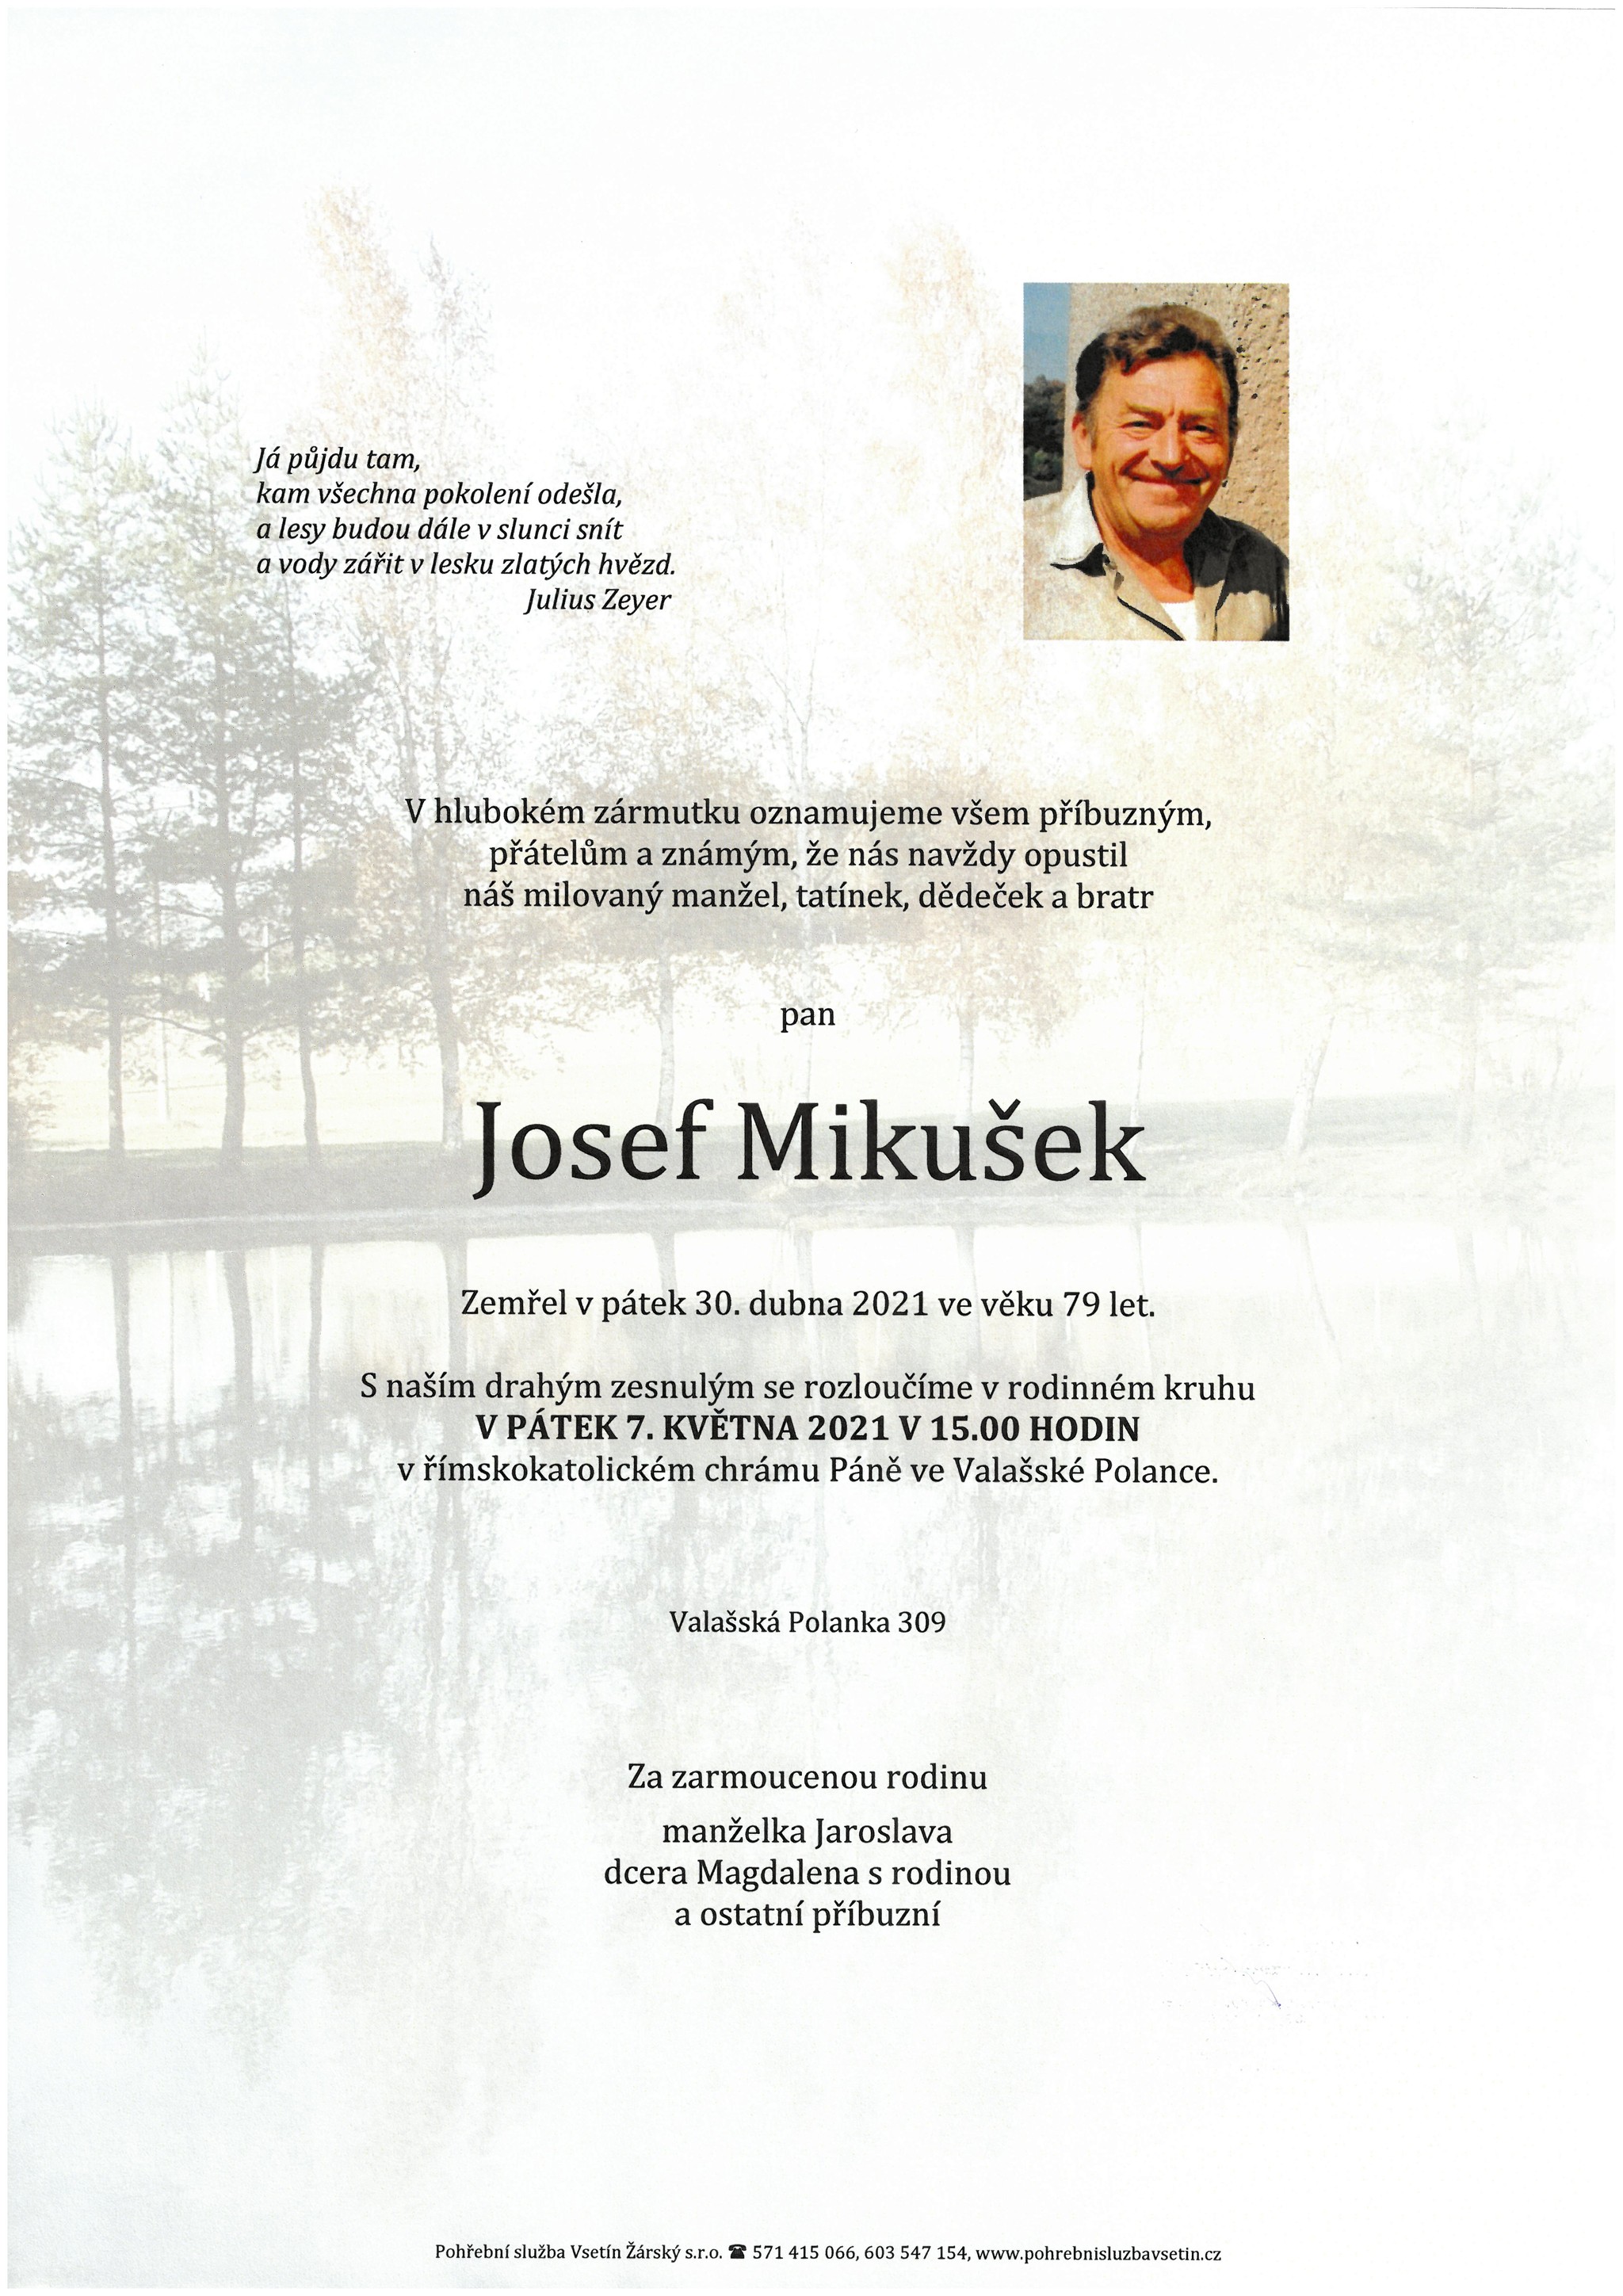 Josef Mikušek